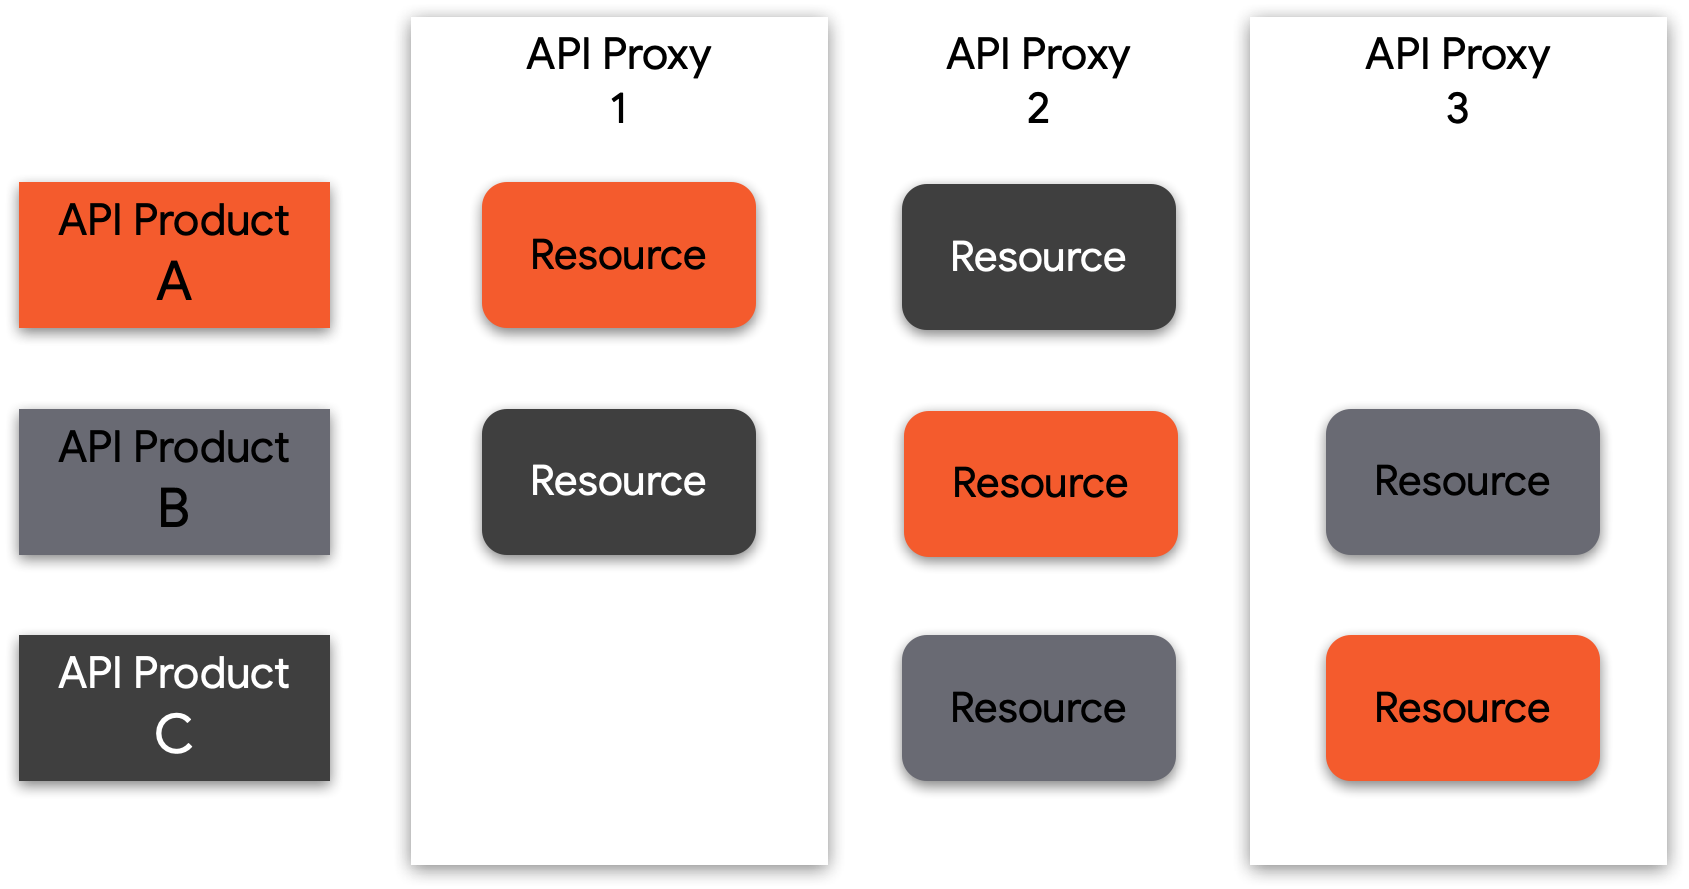 Apoxy - The Proxy Platform